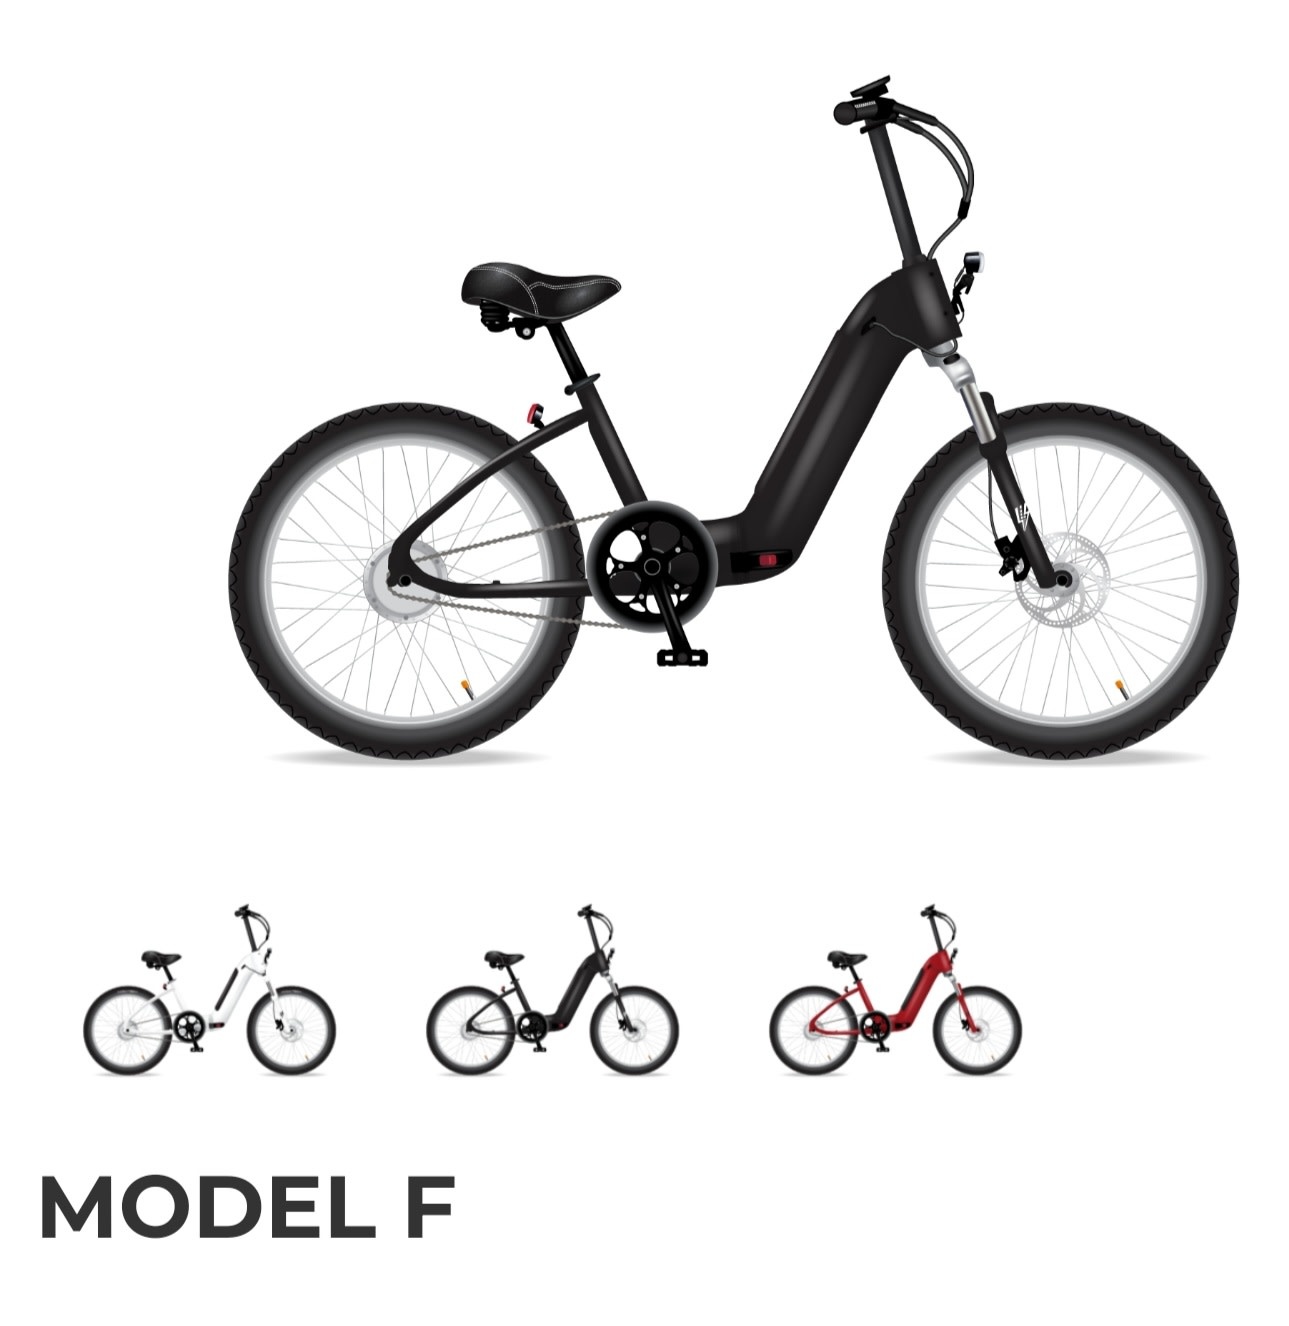 Electric Bike Company Model F